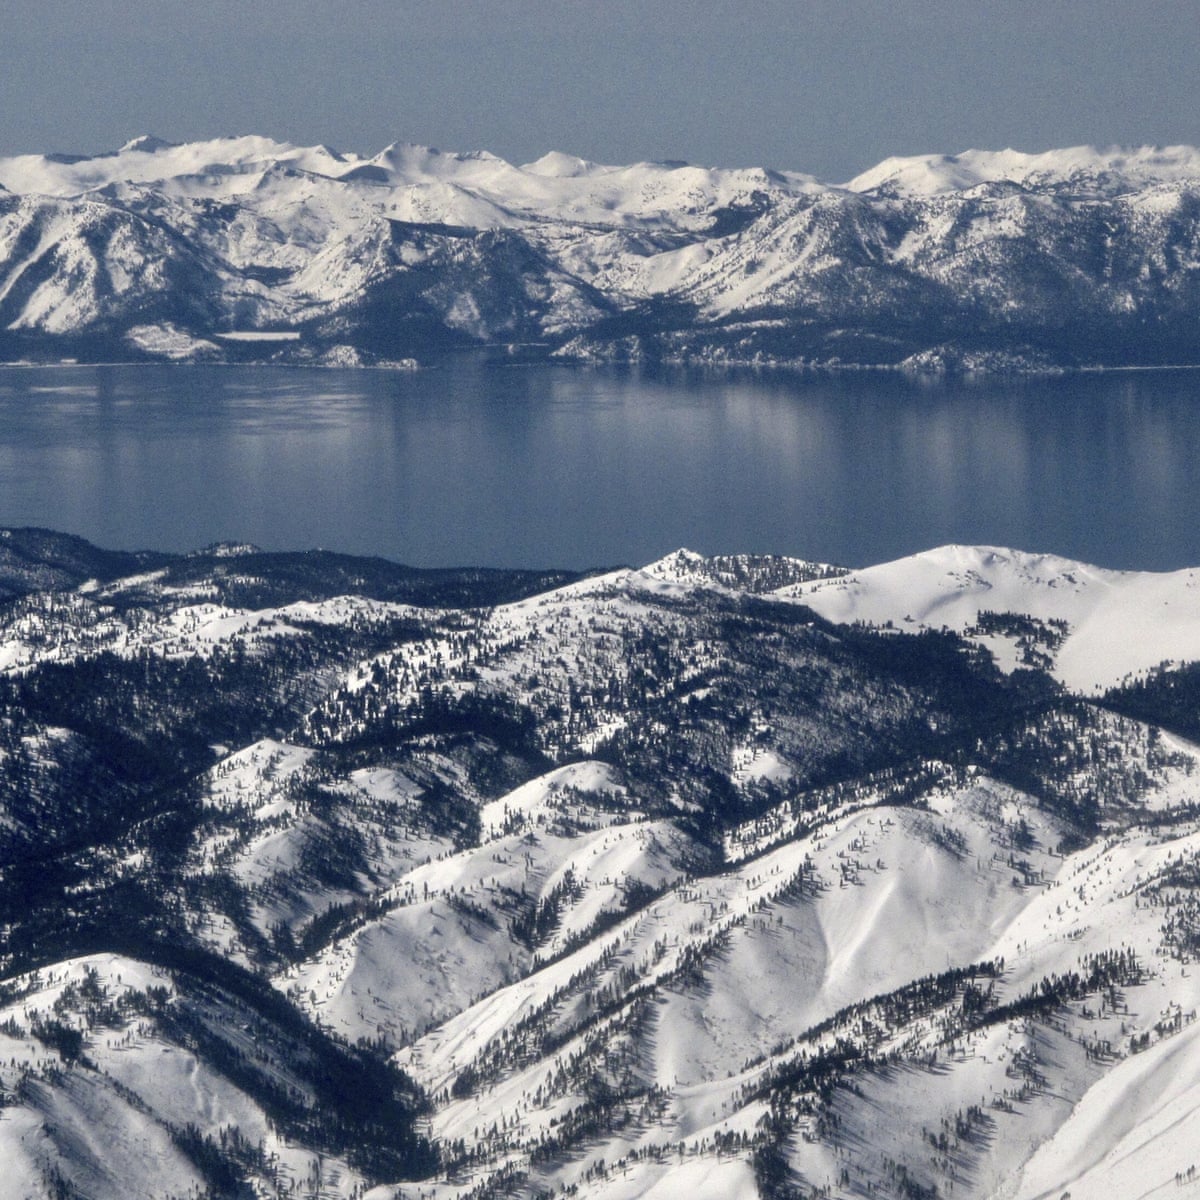 California One Person Killed In Avalanche At Lake Tahoe Ski Resort California The Guardian